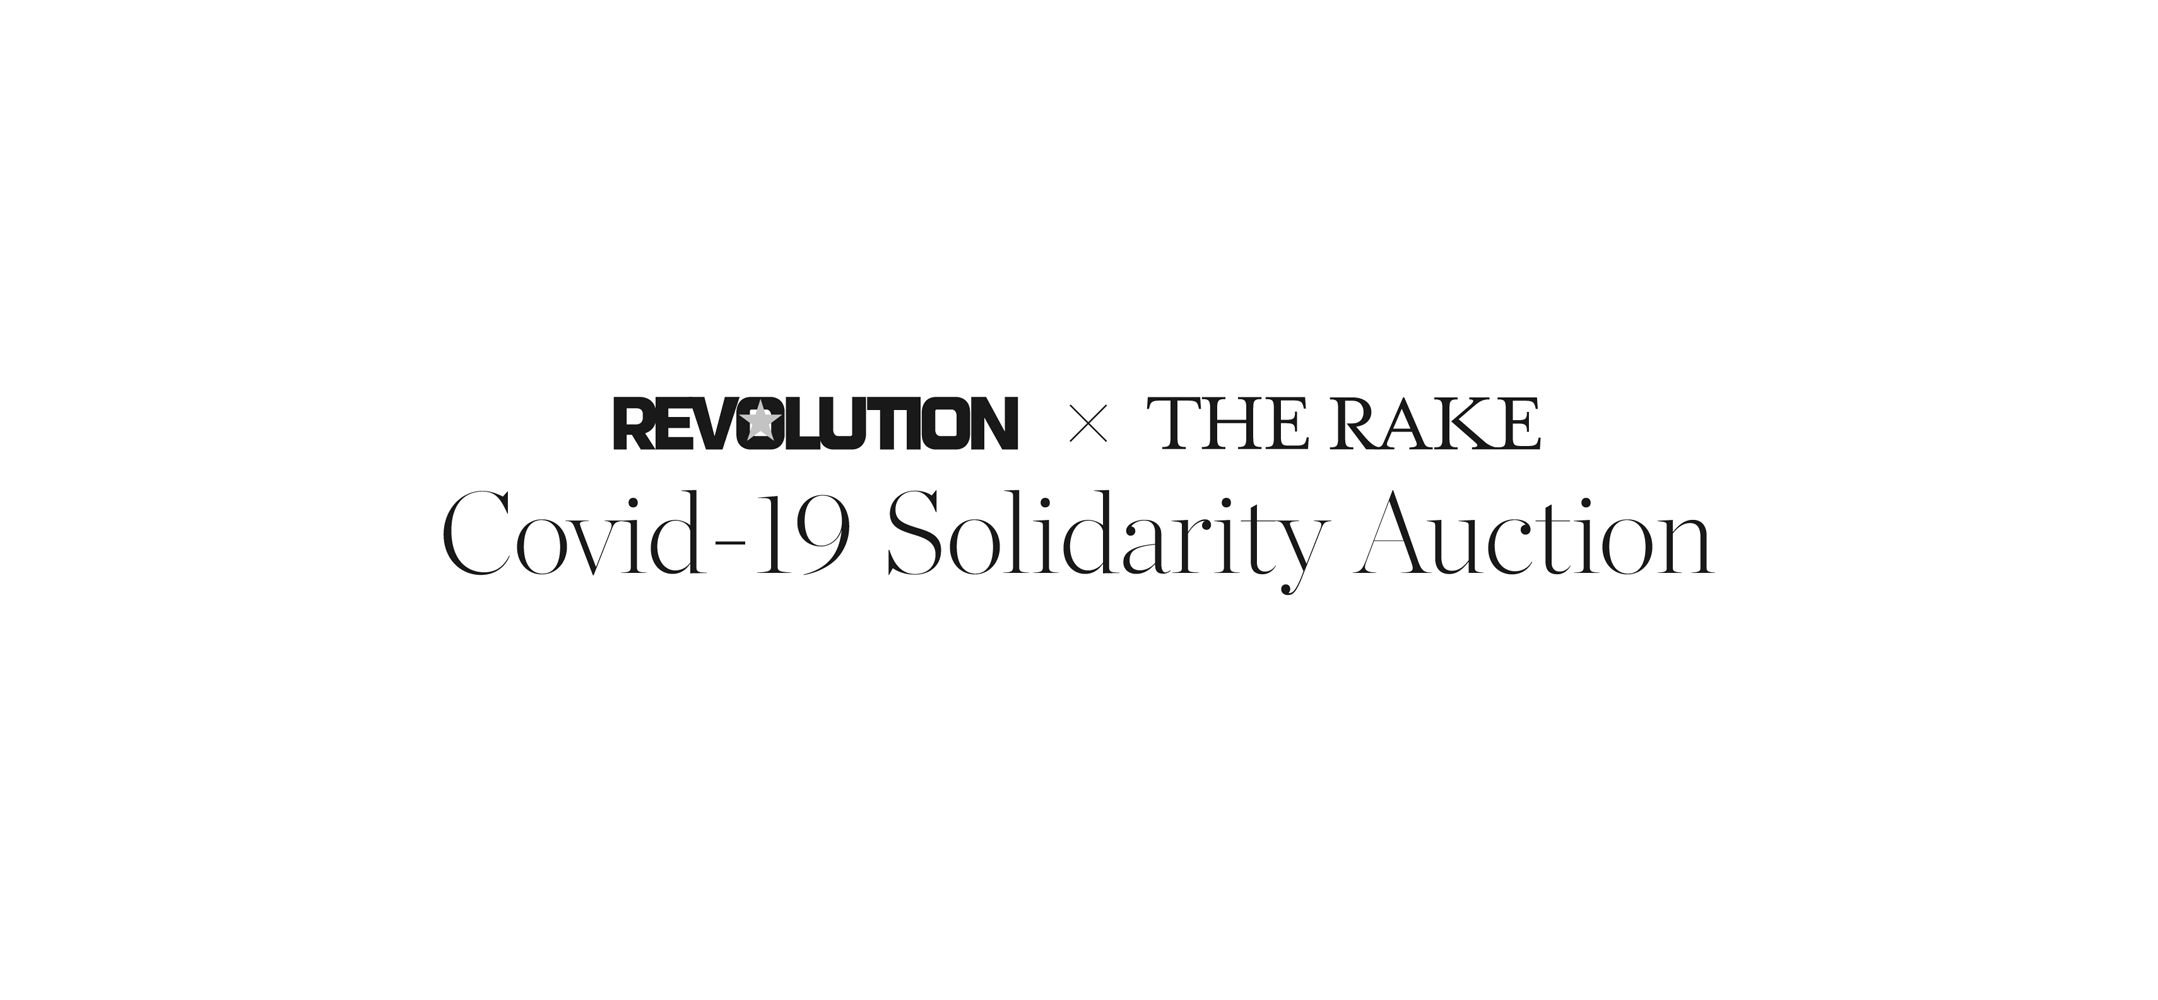 Revolution x The Rake Covid-19 Solidarity Auction